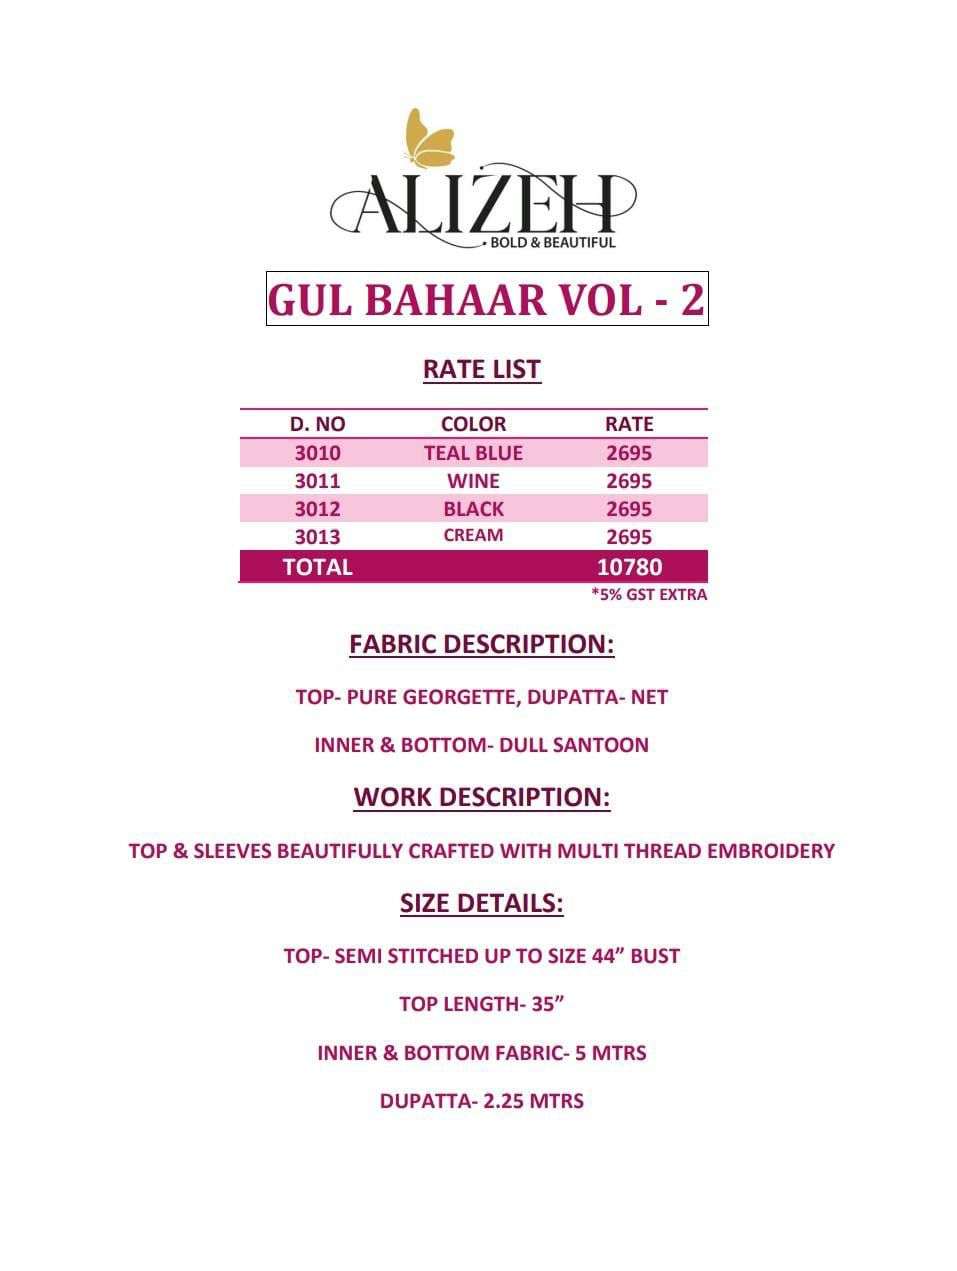 alizeh gul bahar vol 3 3010-3013 series party wear salwar kameez collection surat